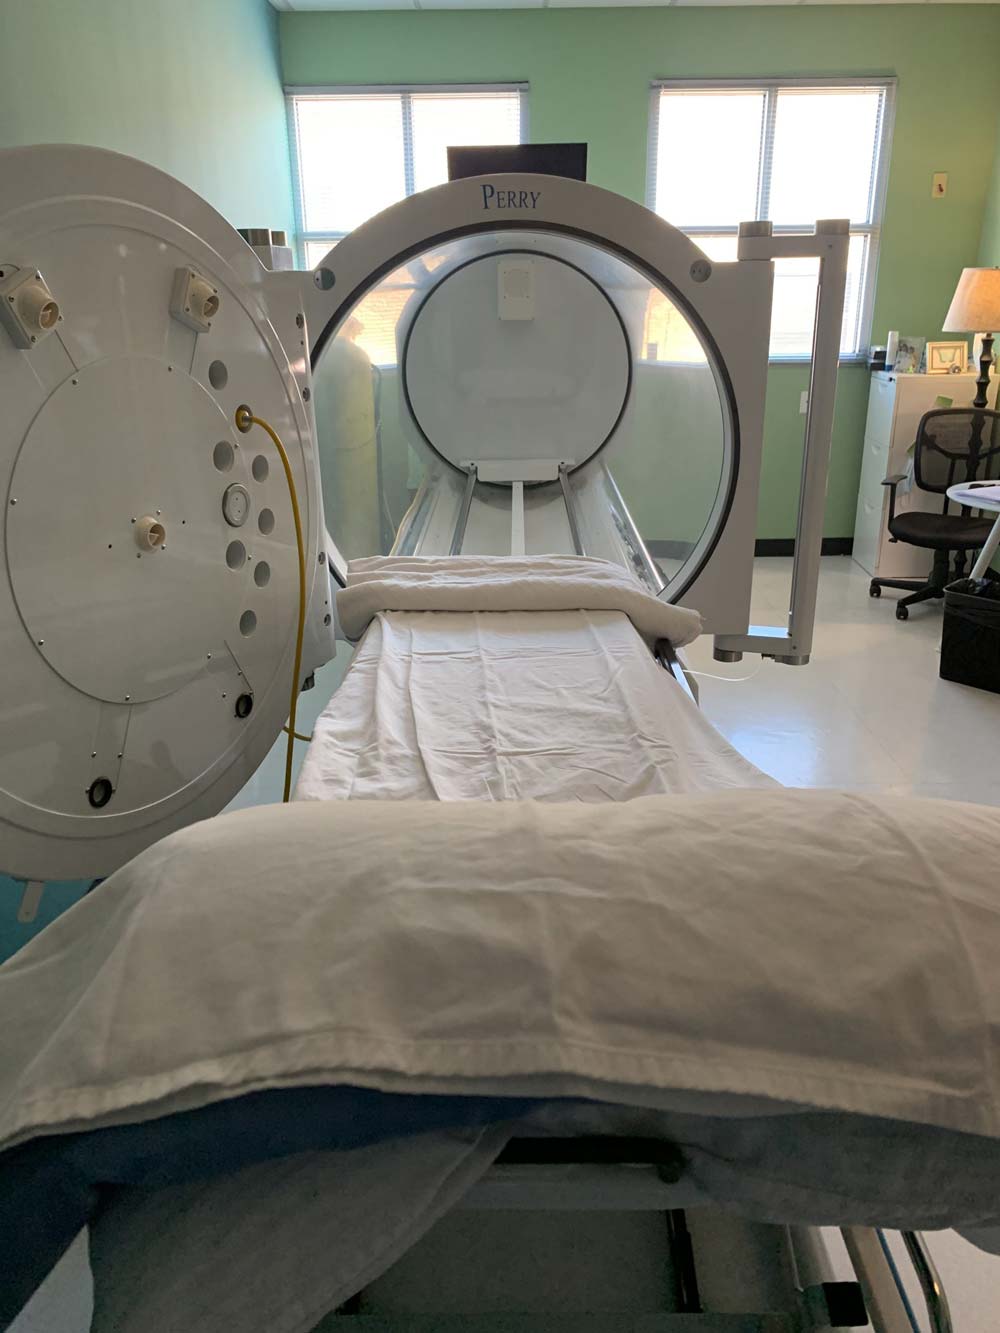 An MRI machine in a hospital room.